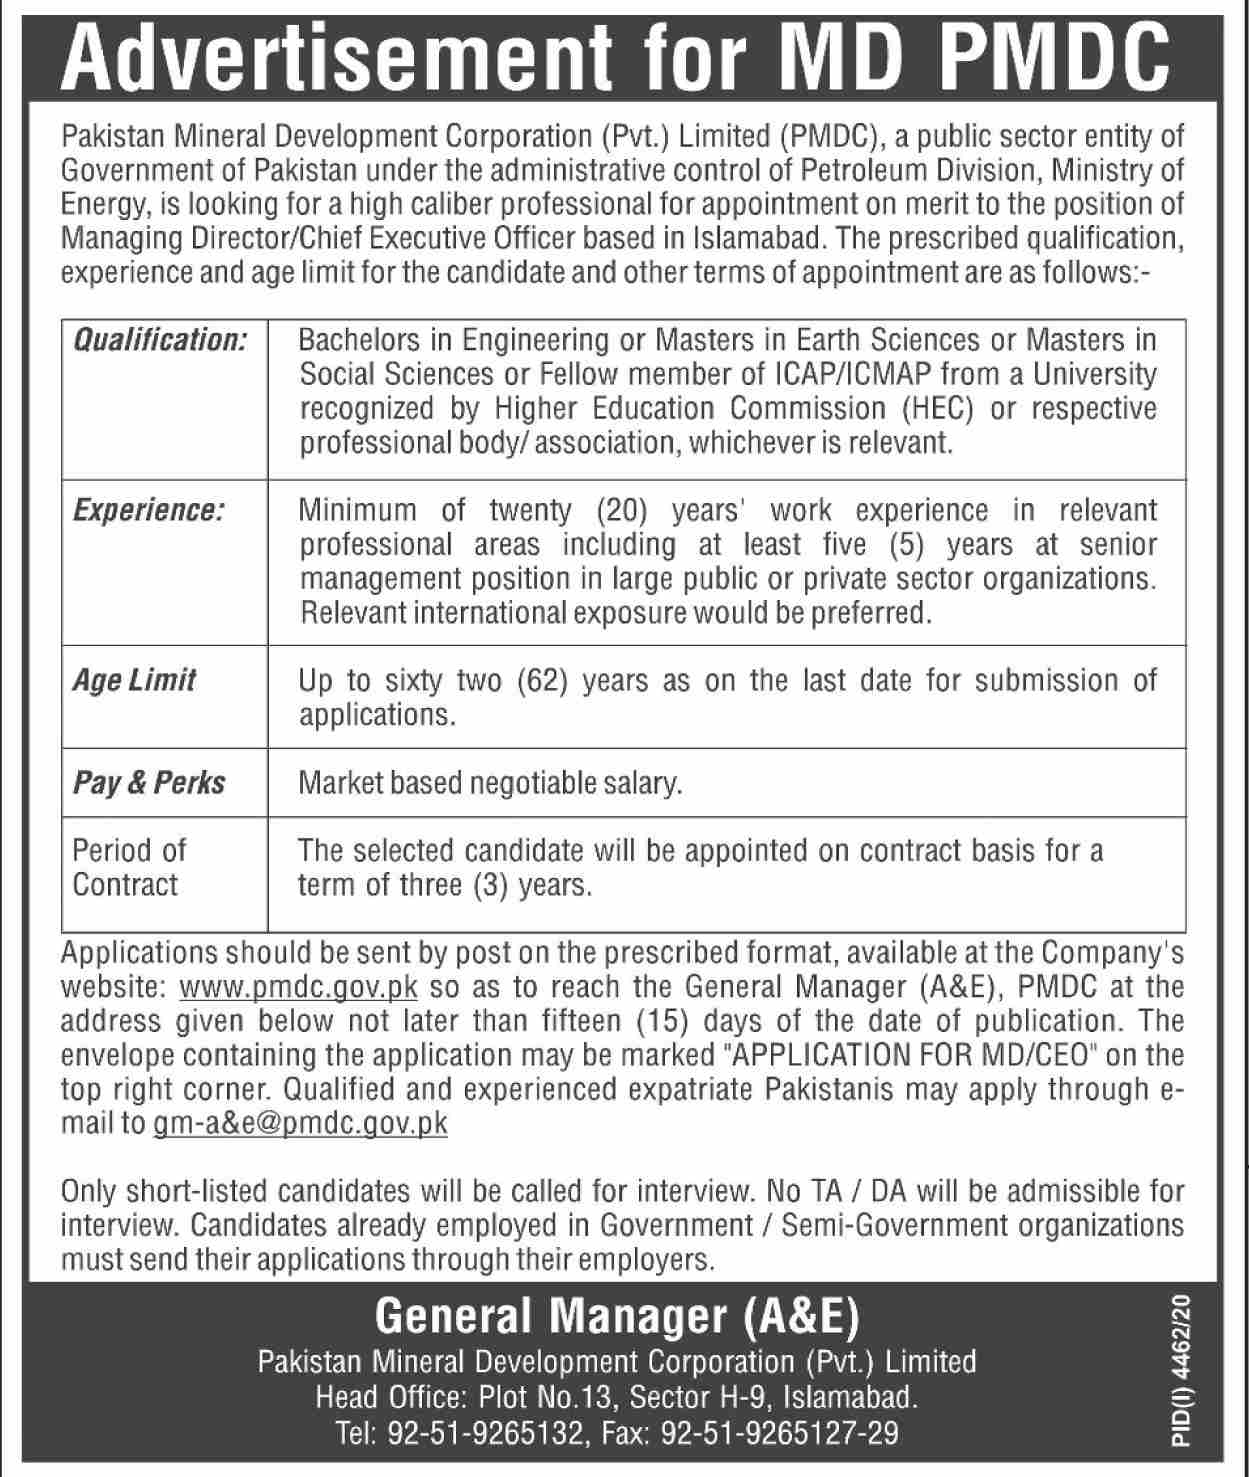 Pakistan Mineral Development Corporation (PMDC) Jobs 2021 in Pakistan - www.pdmc.gov.pk - gm-a&e@pdmc.gov.pk